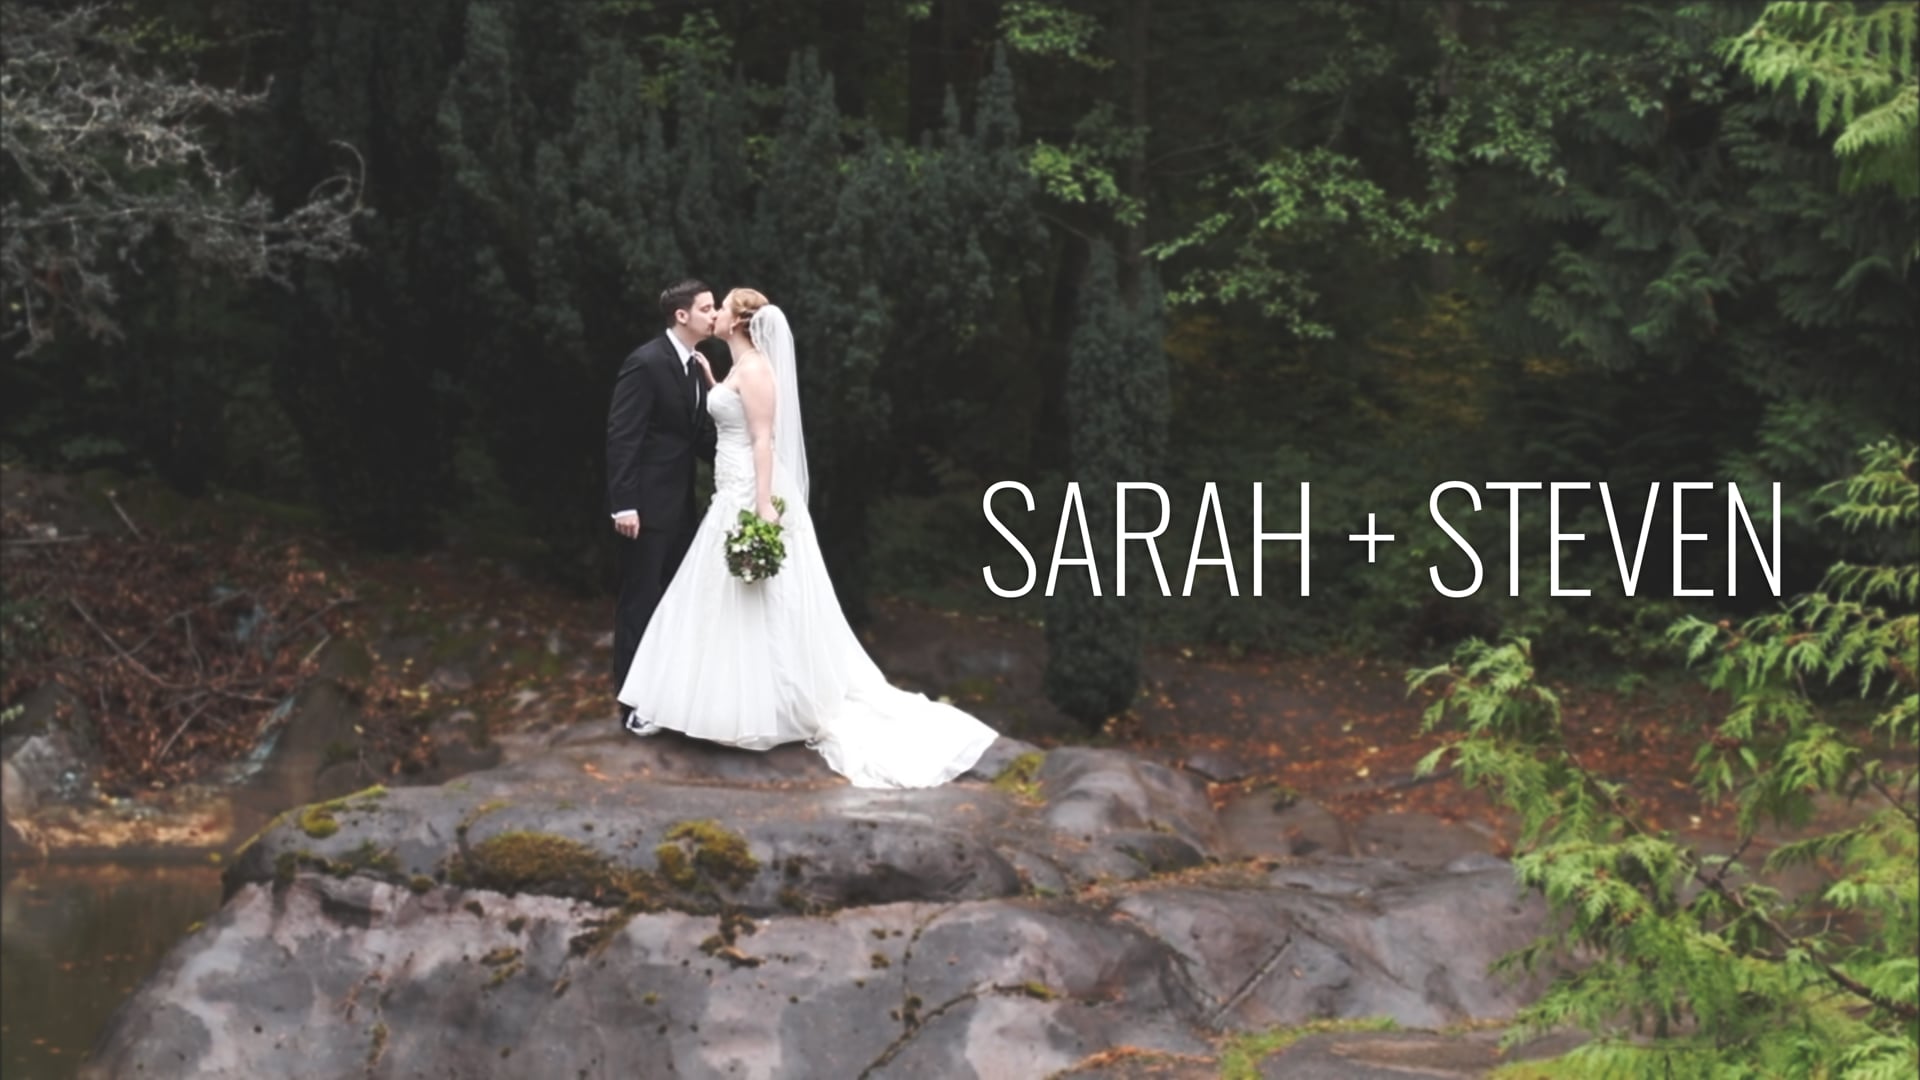 Sarah + Steven // WEDDING HIGHLIGHTS